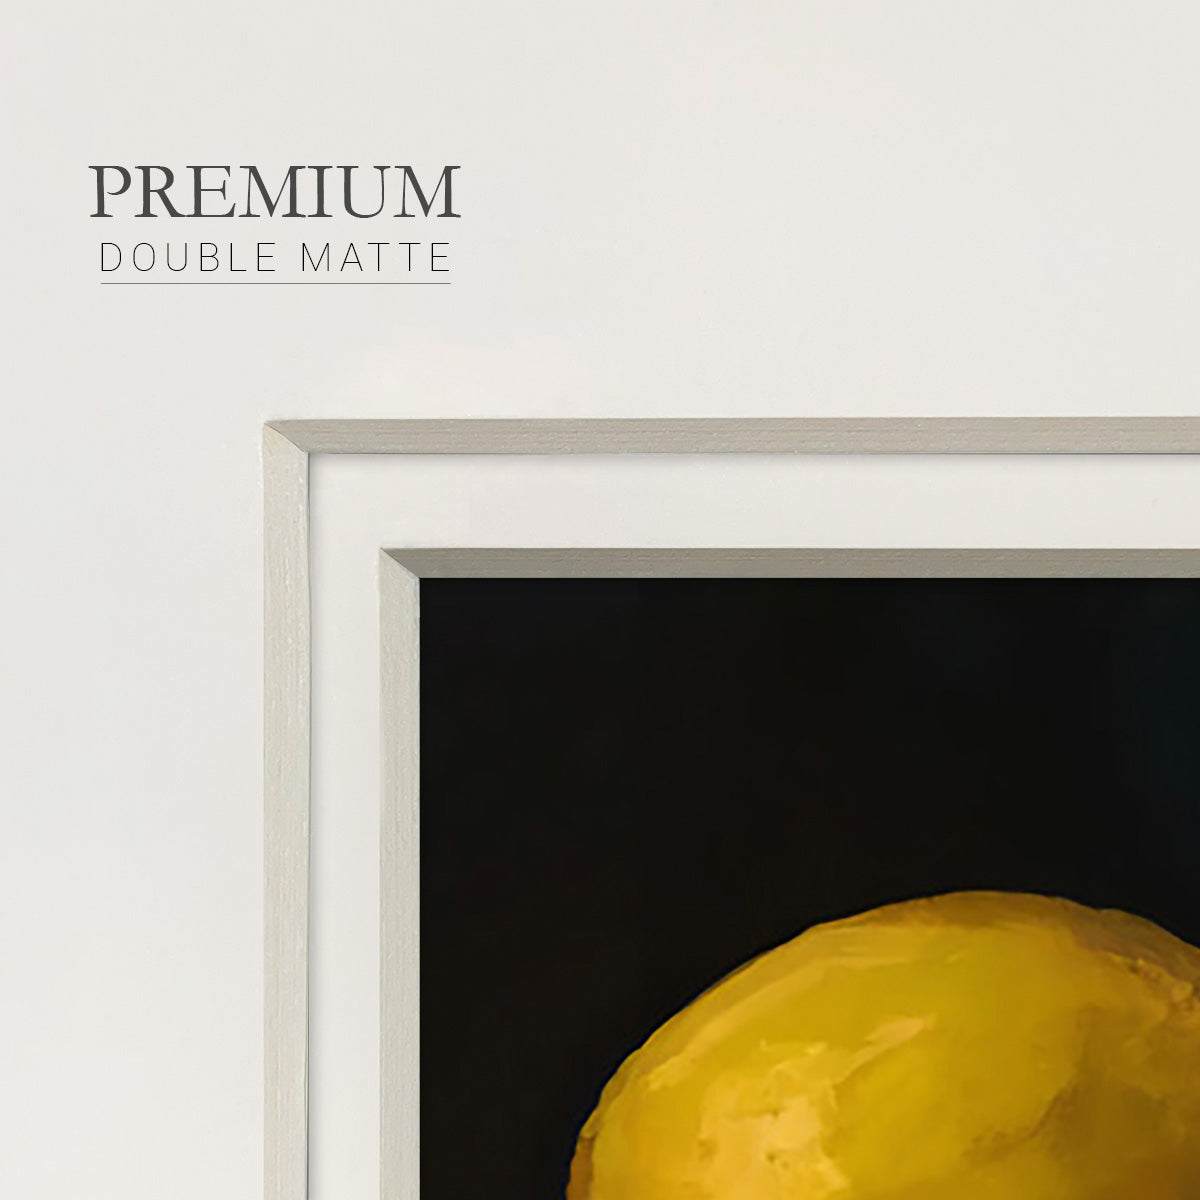 Lonely Lemon Premium Framed Print Double Matboard